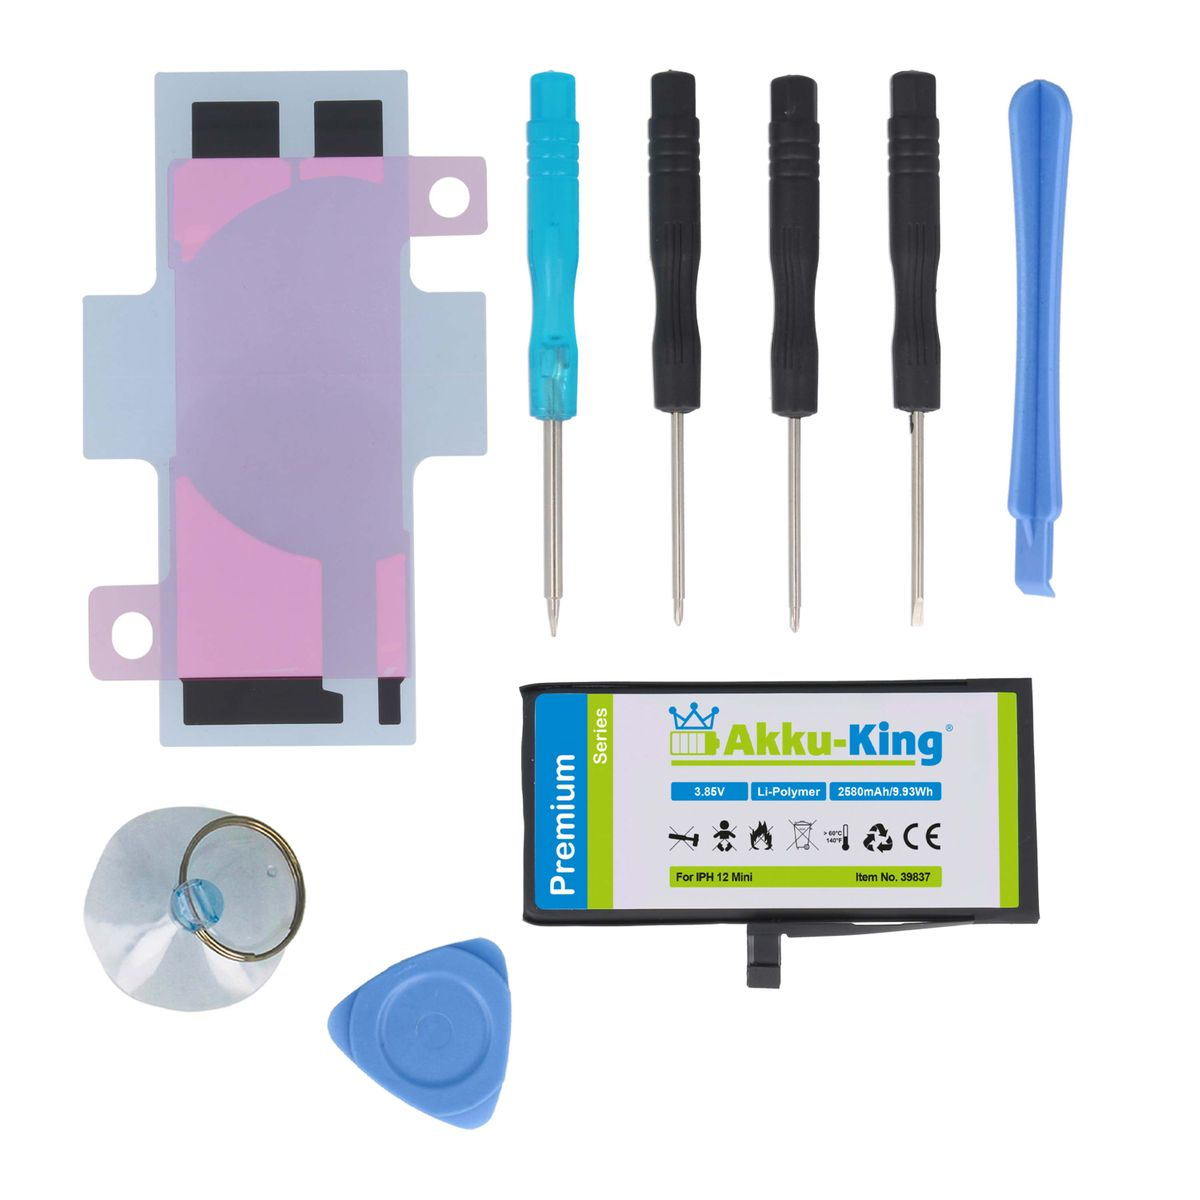 AKKU-KING Power-Akku Mini 12 Volt, Handy-Akku, Li-Polymer iPhone 3.85 für 2580mAh